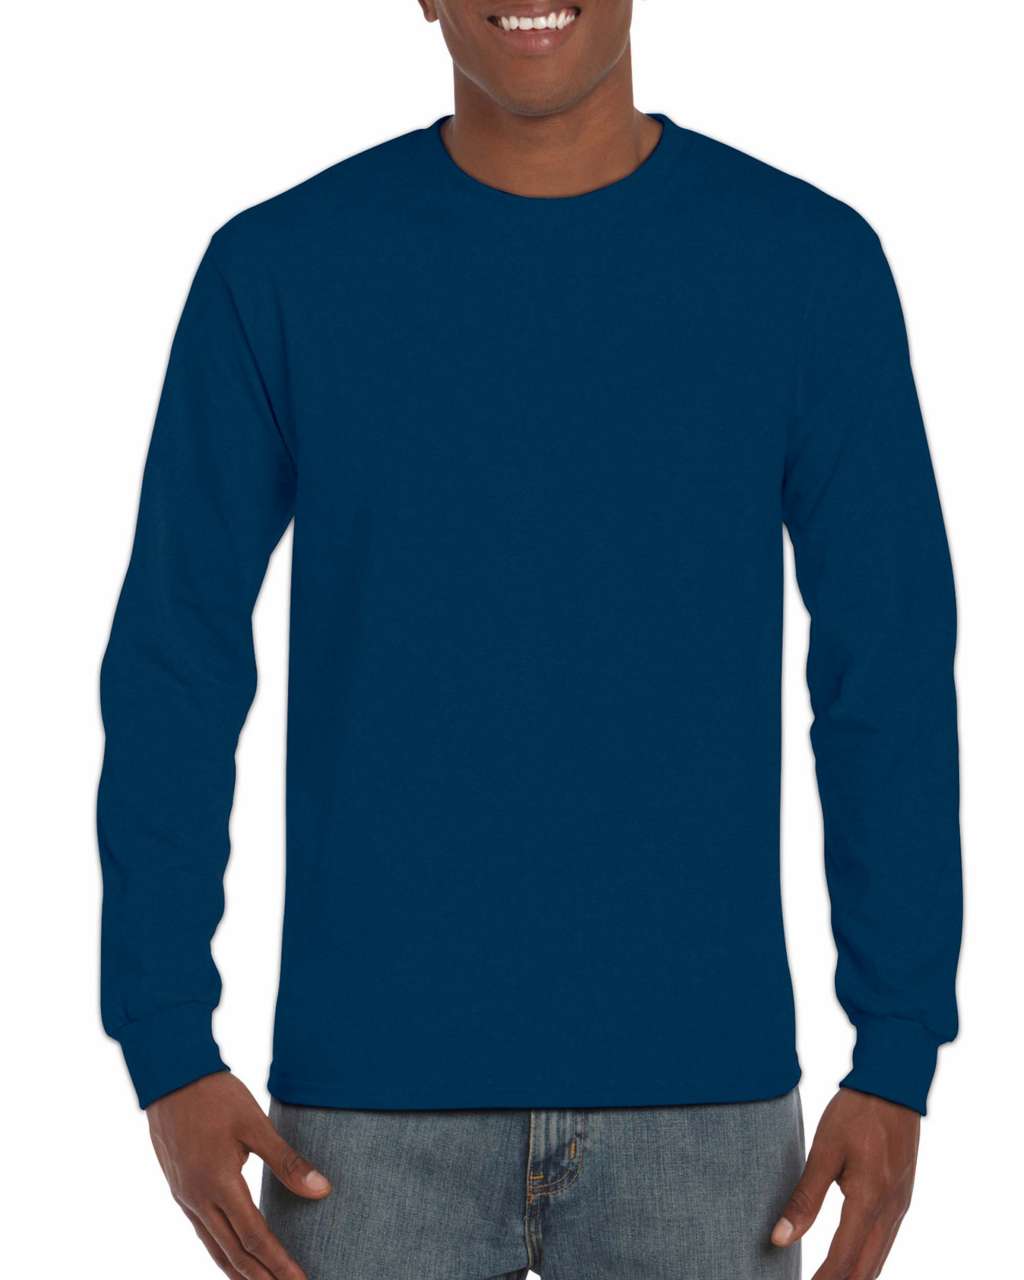 Gildan Hammer Adult Long Sleeve T-shirt - Gildan Hammer Adult Long Sleeve T-shirt - Sport Dark Navy